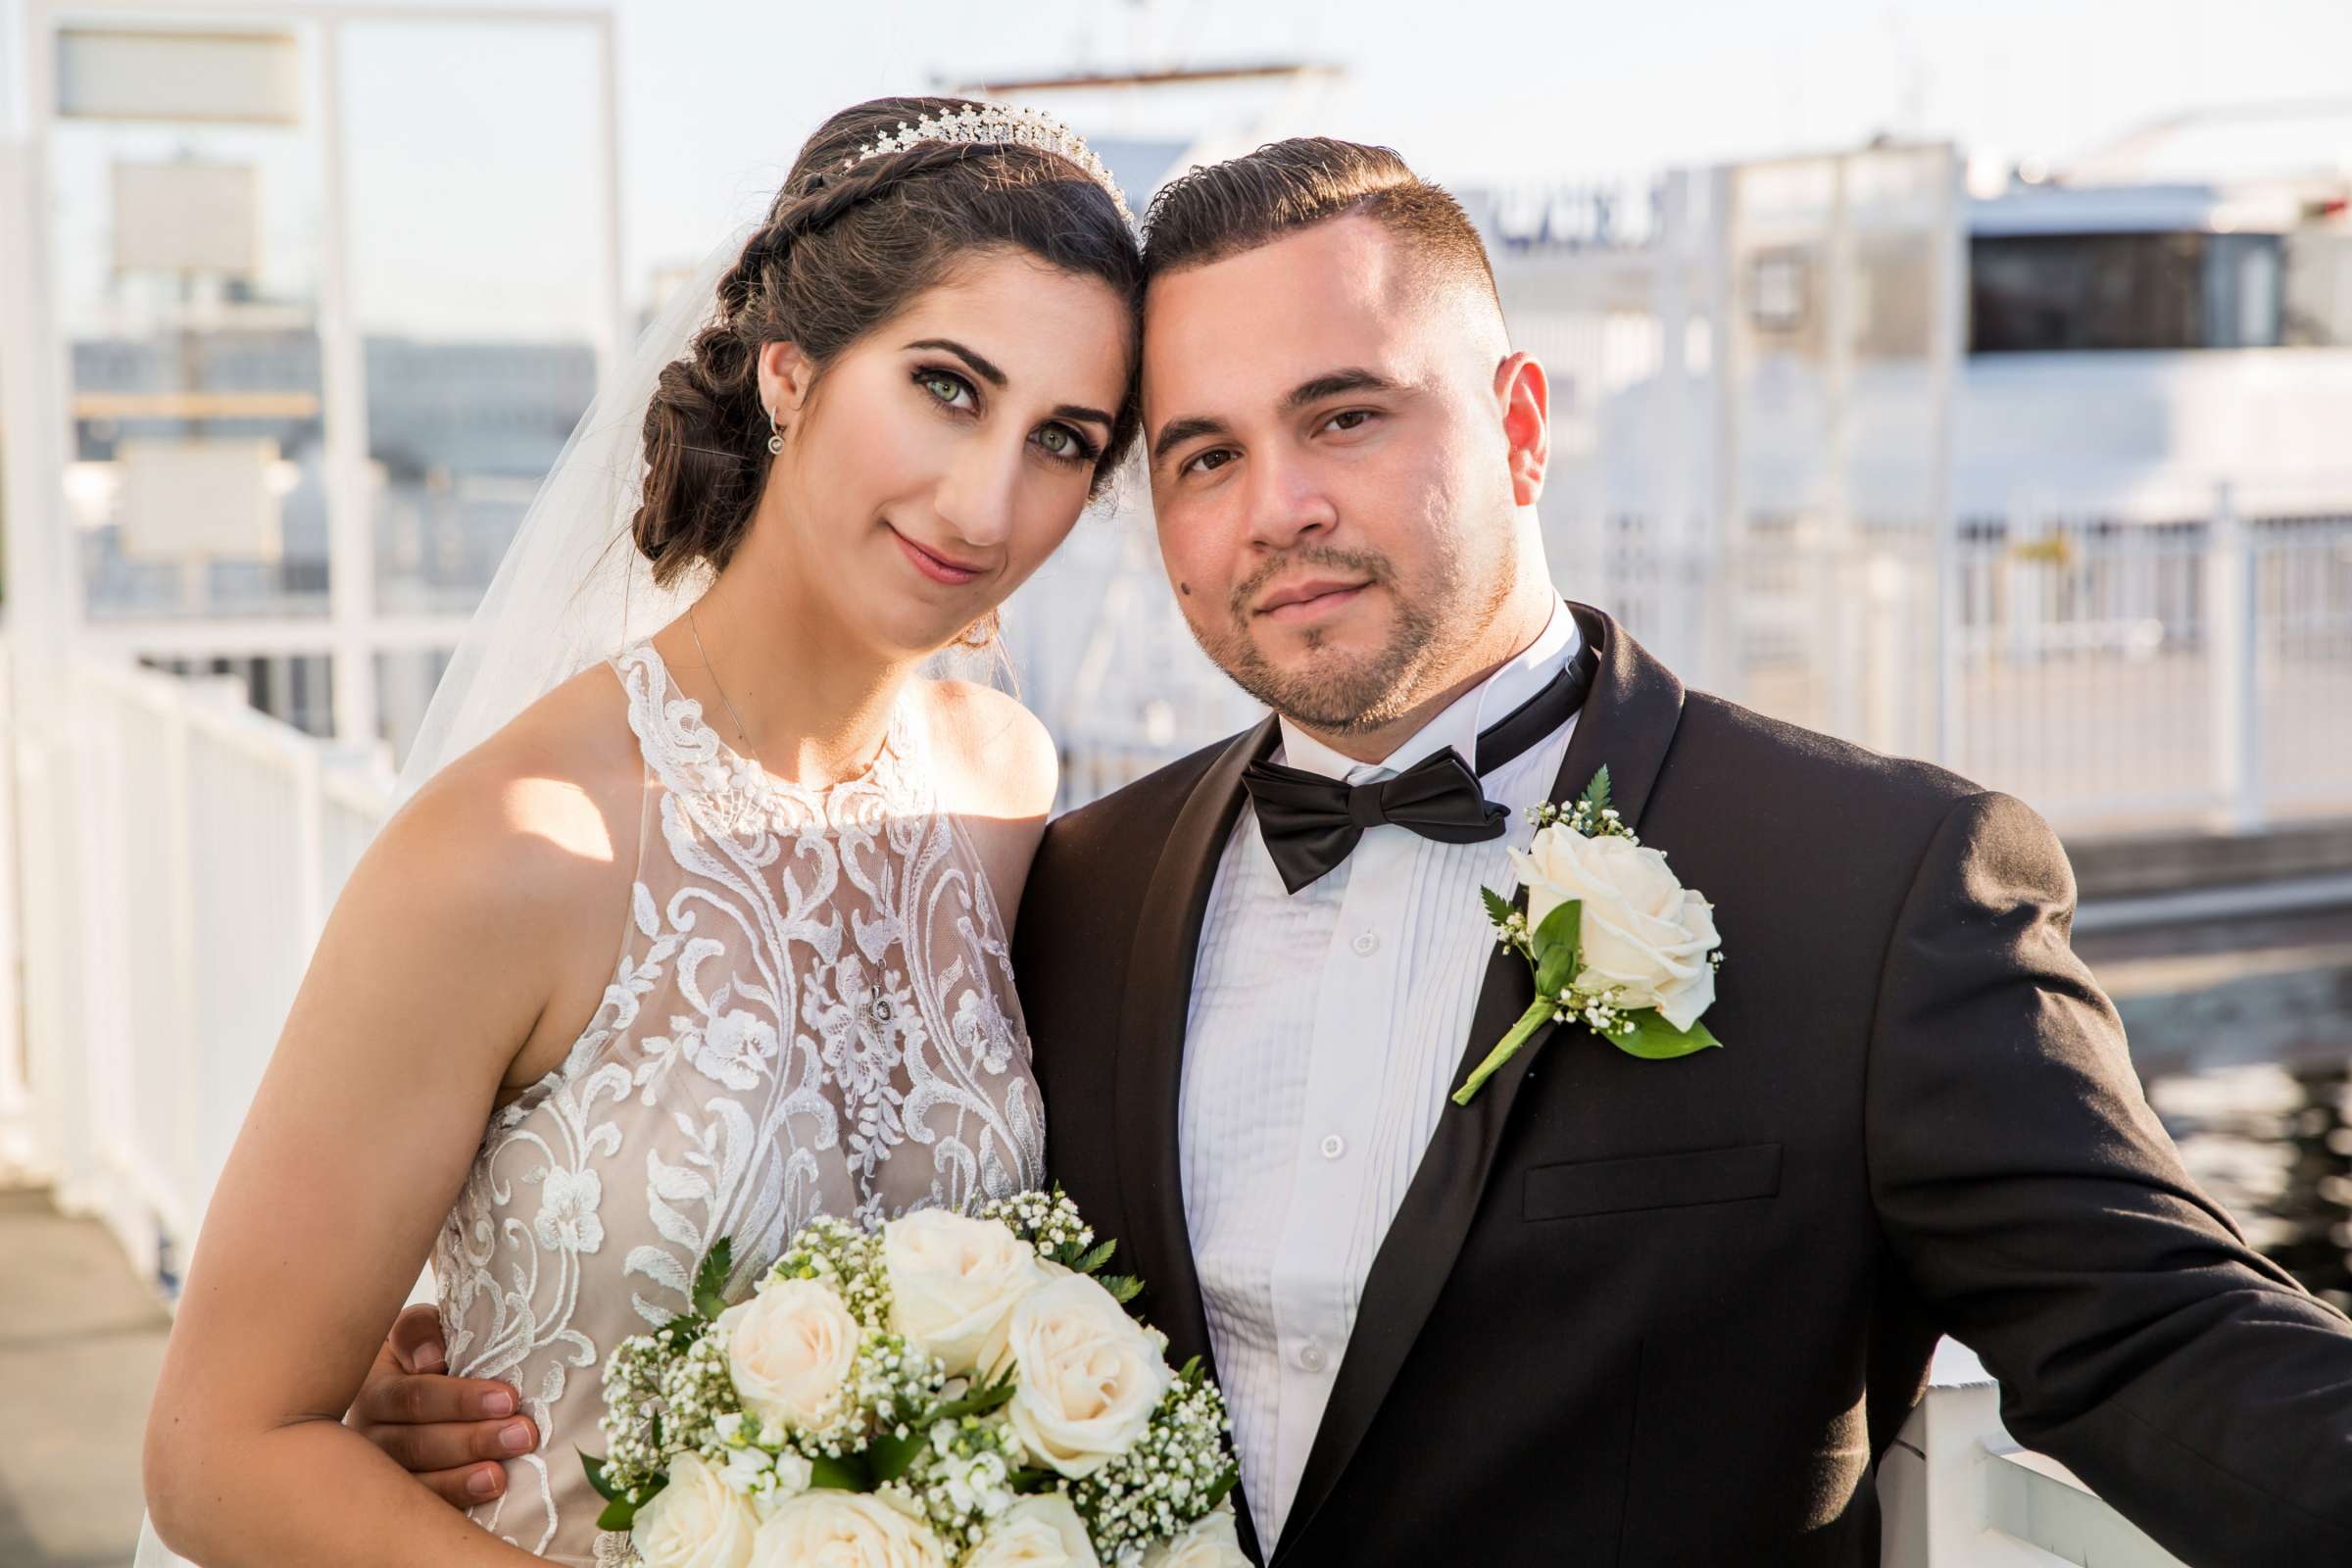 Hornblower cruise line Wedding, Leena and Daniel Wedding Photo #8 by True Photography